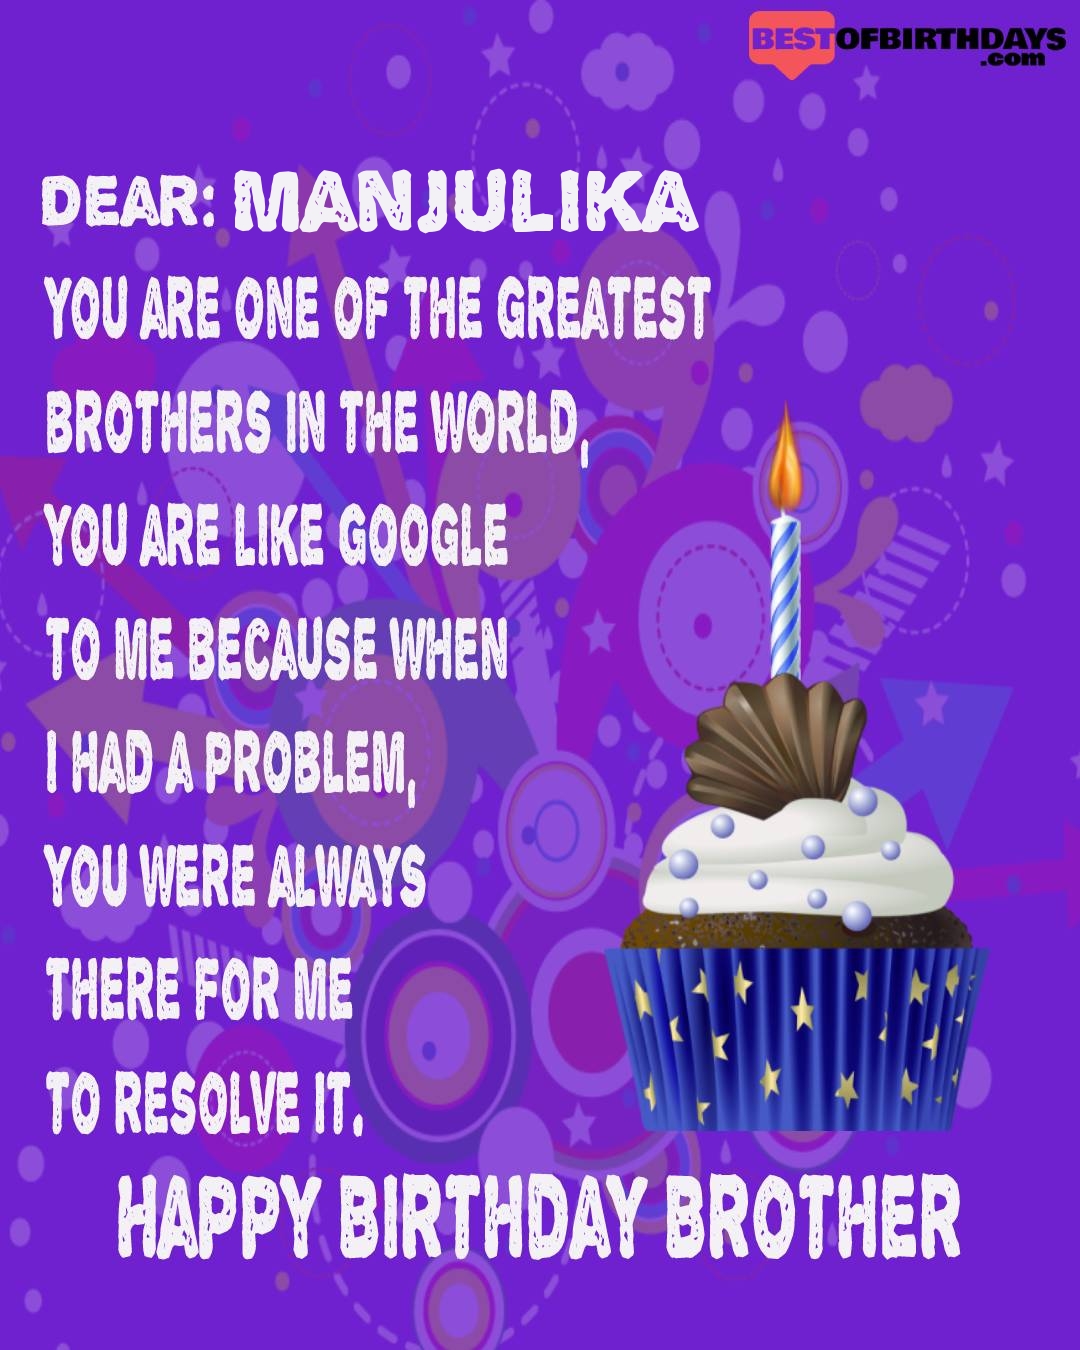 Happy birthday manjulika bhai brother bro